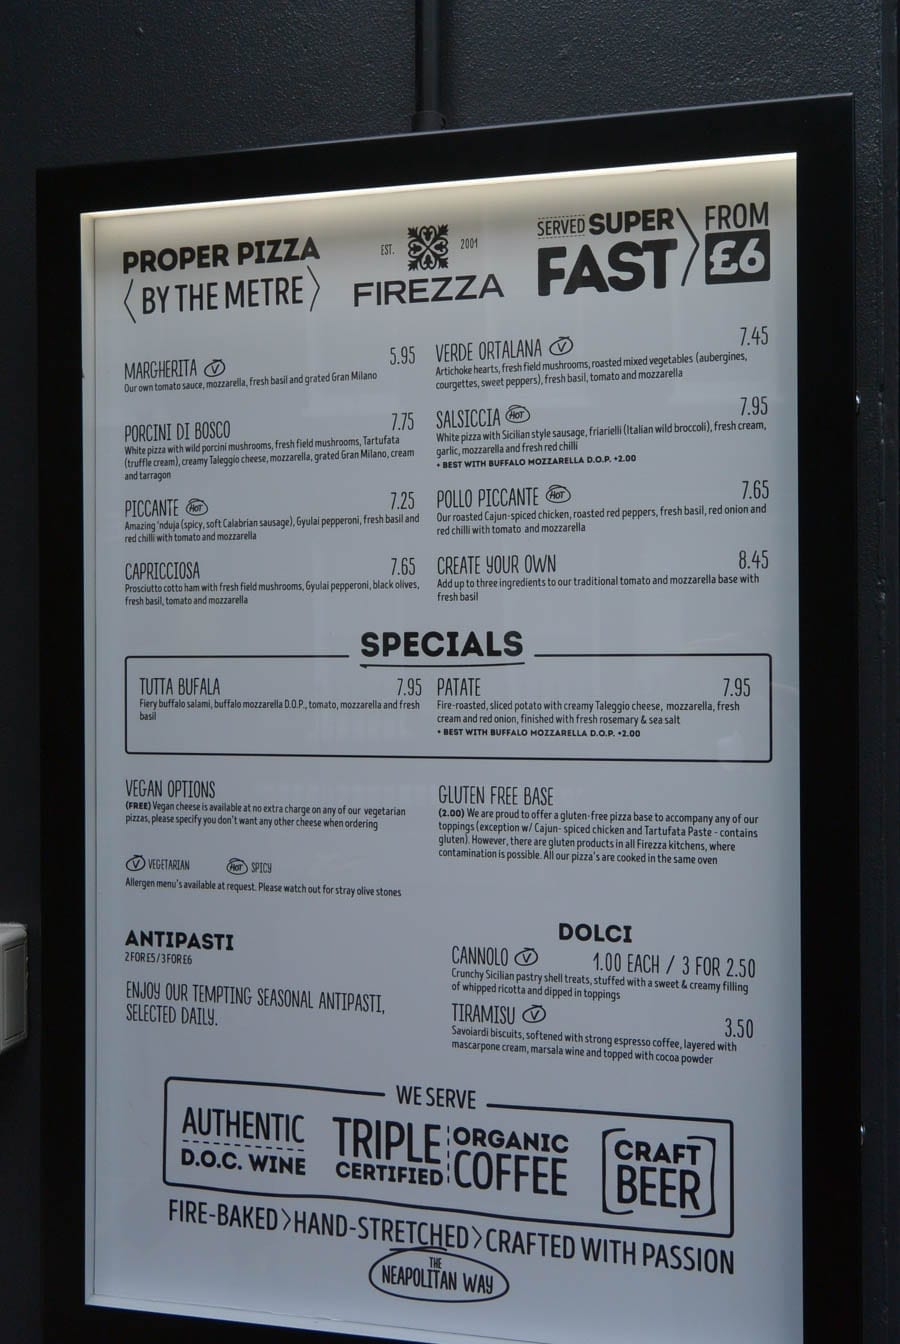 Basically Brilliant – Edin Basic, co-founder of Firezza opens “proper pizza restaurant” in Soho on 12th April 2017 – Firezza Dean Street, 22 – 25 Dean Street, London, W1D 3RY